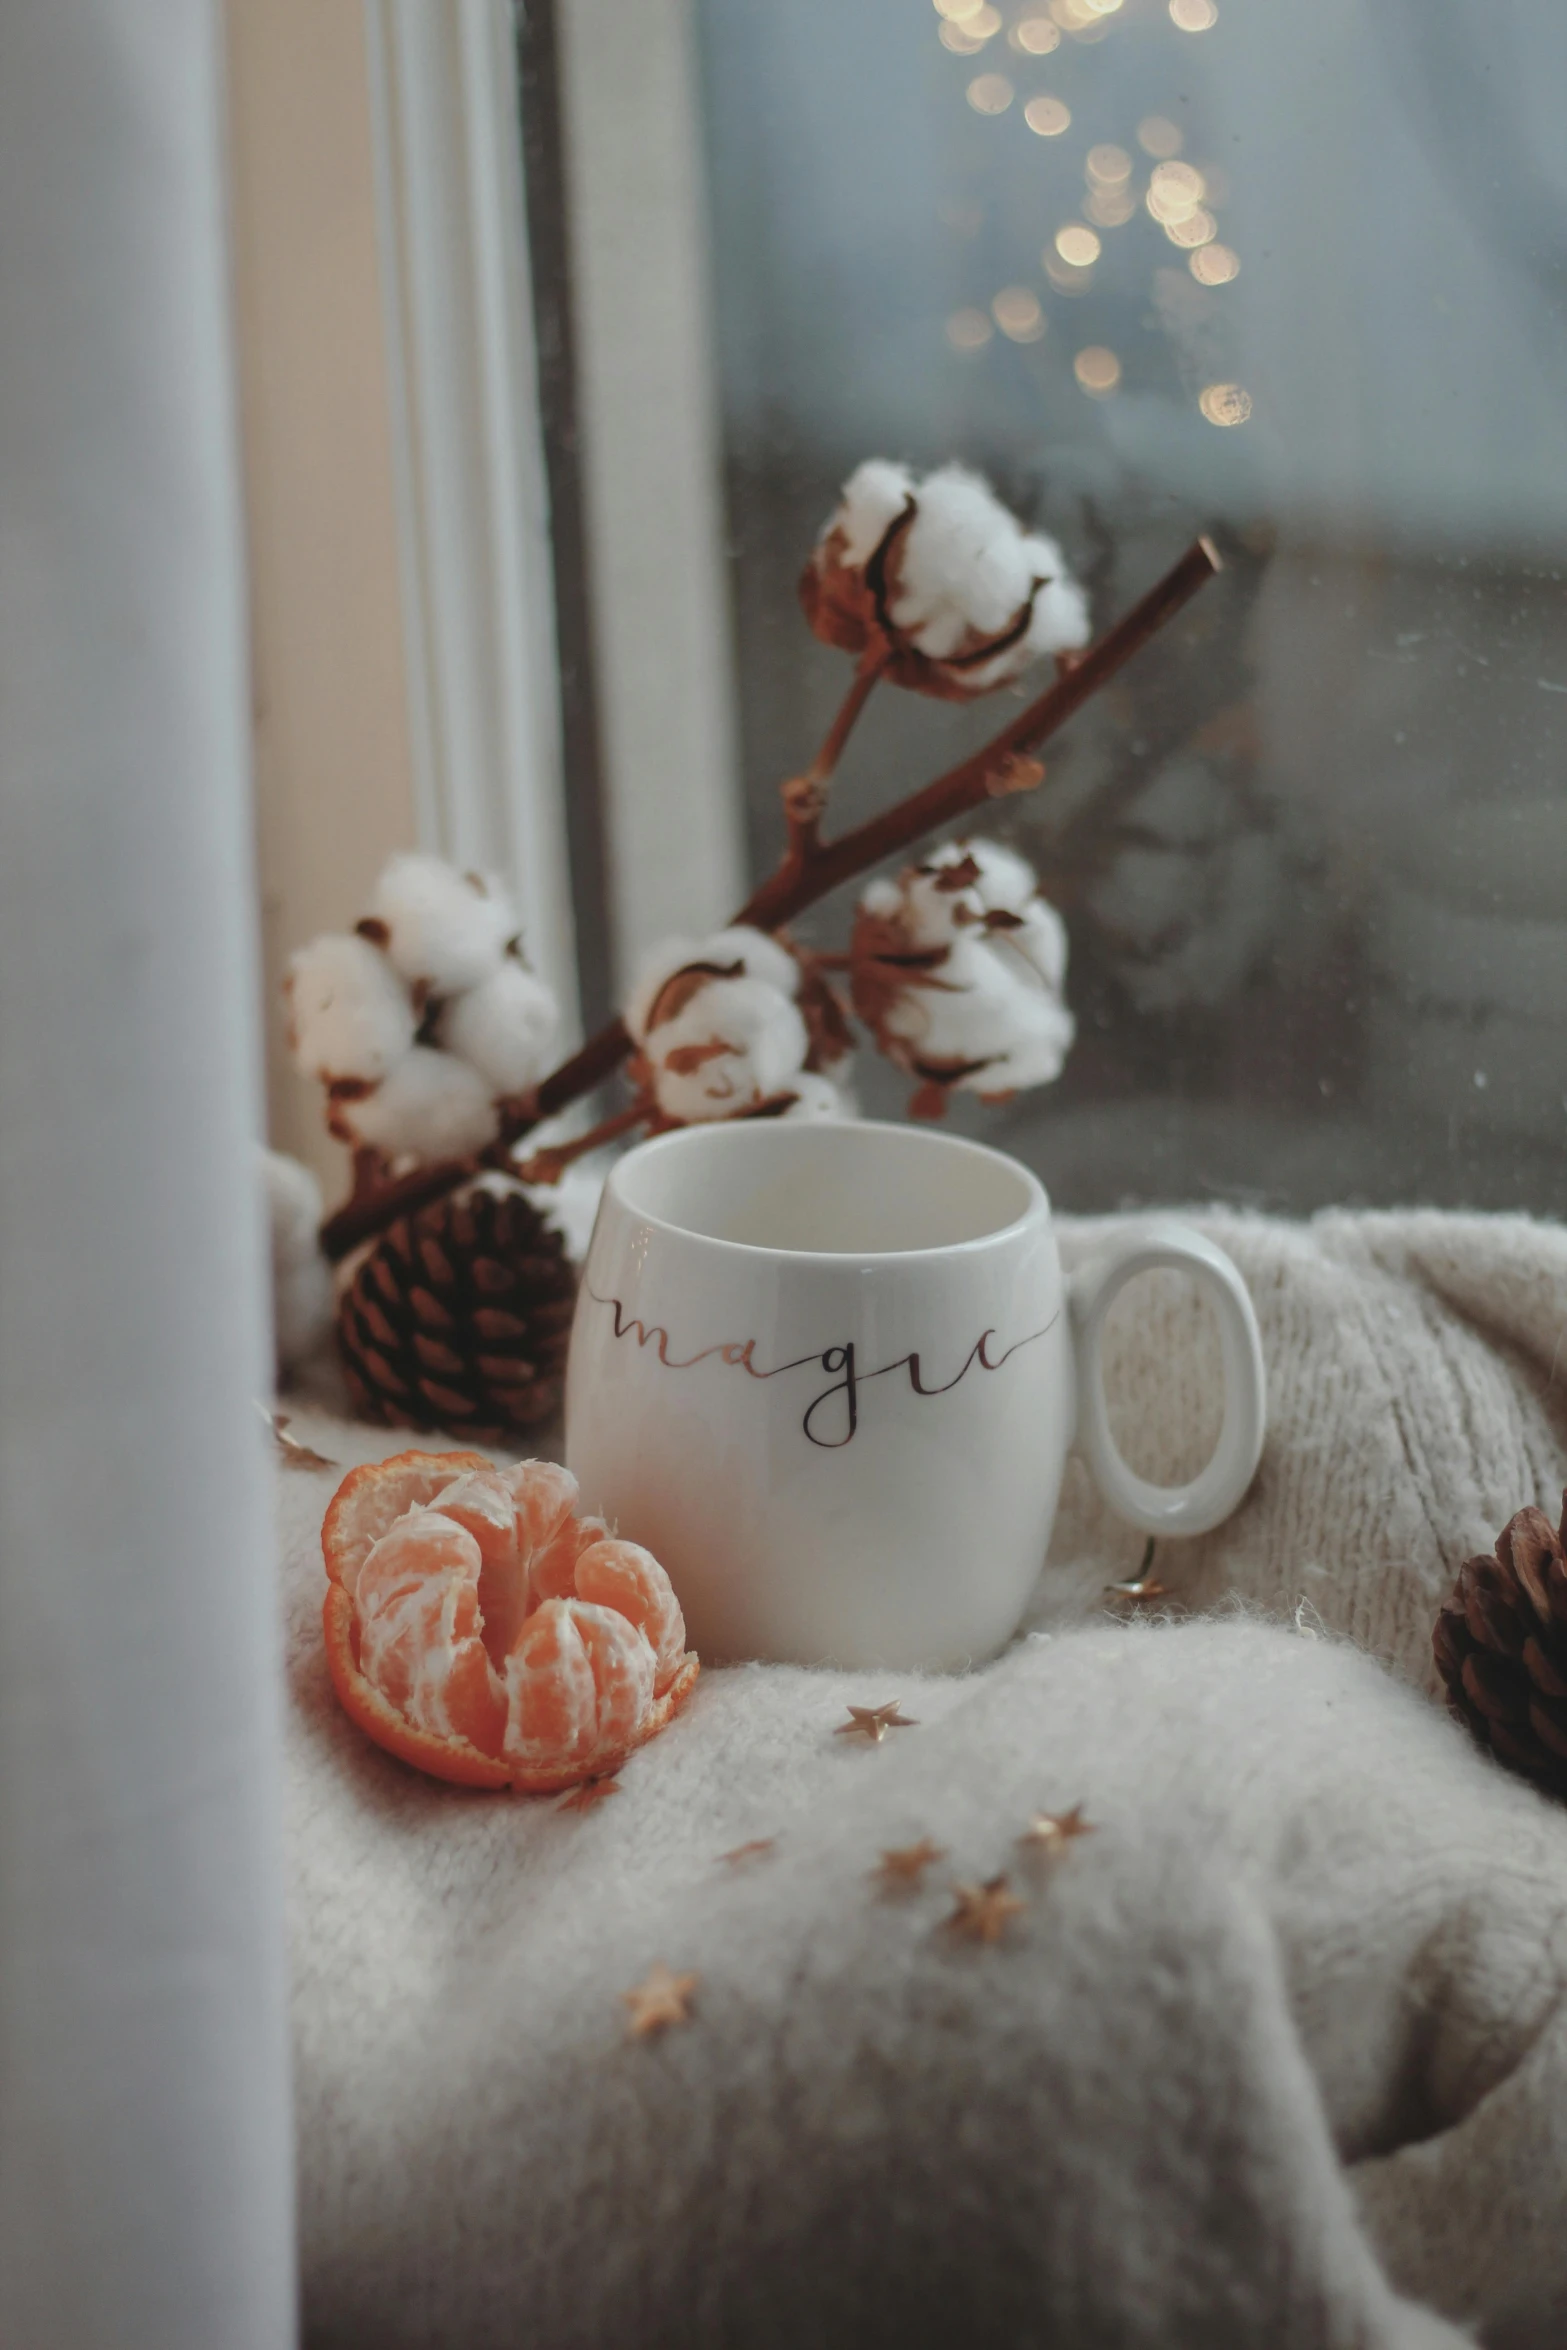 a mug and some oranges are on a windowsill